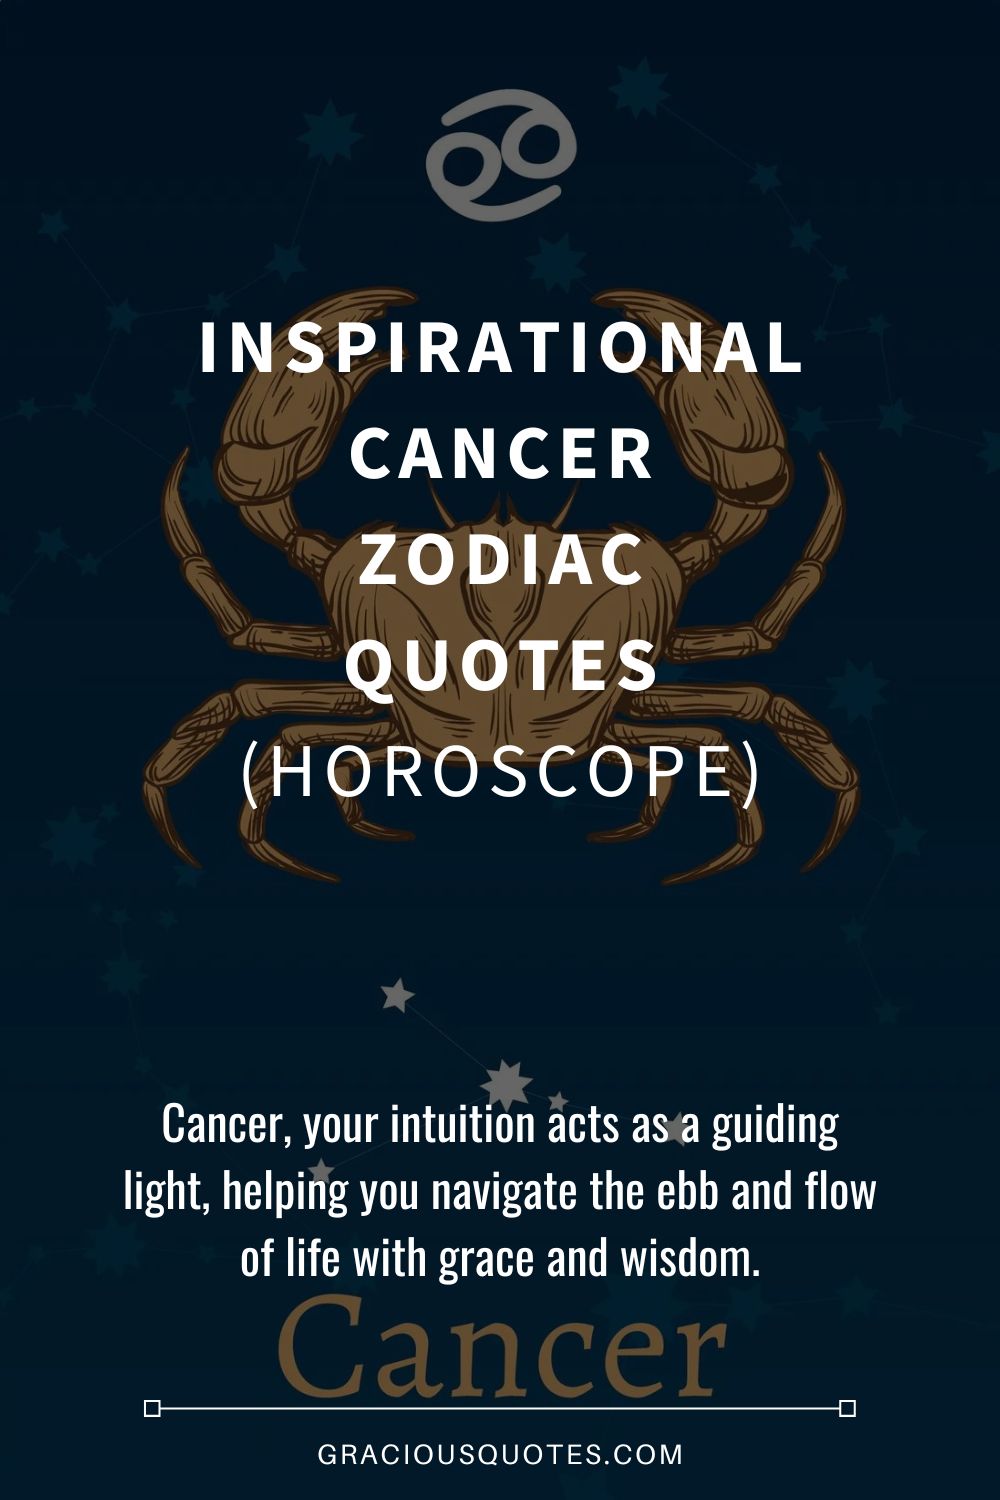 Inspirational Cancer Zodiac Quotes (HOROSCOPE) - Gracious Quotes